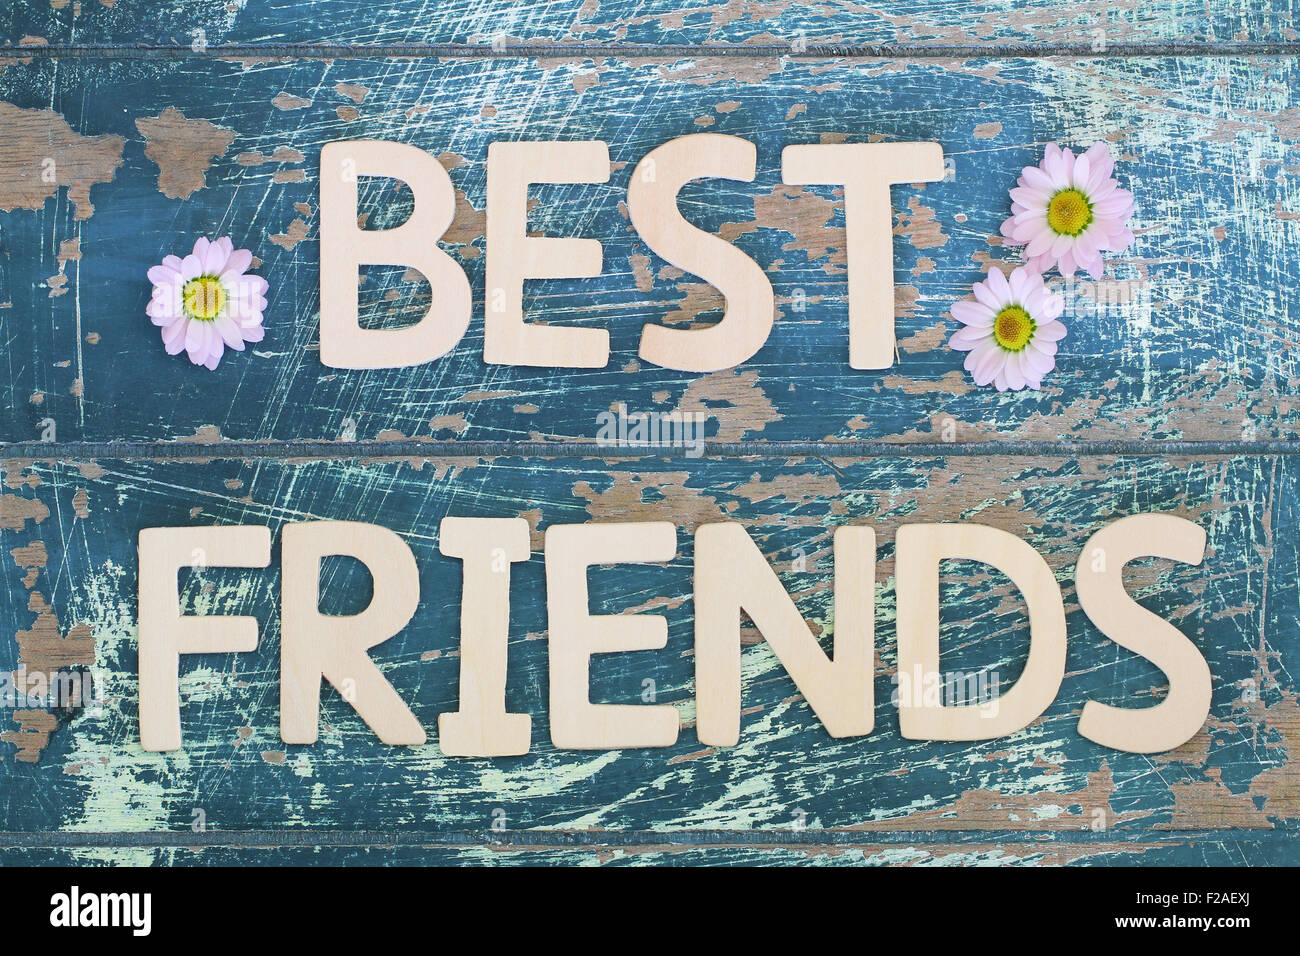 Best friends written on rustic wooden surface Stock Photo